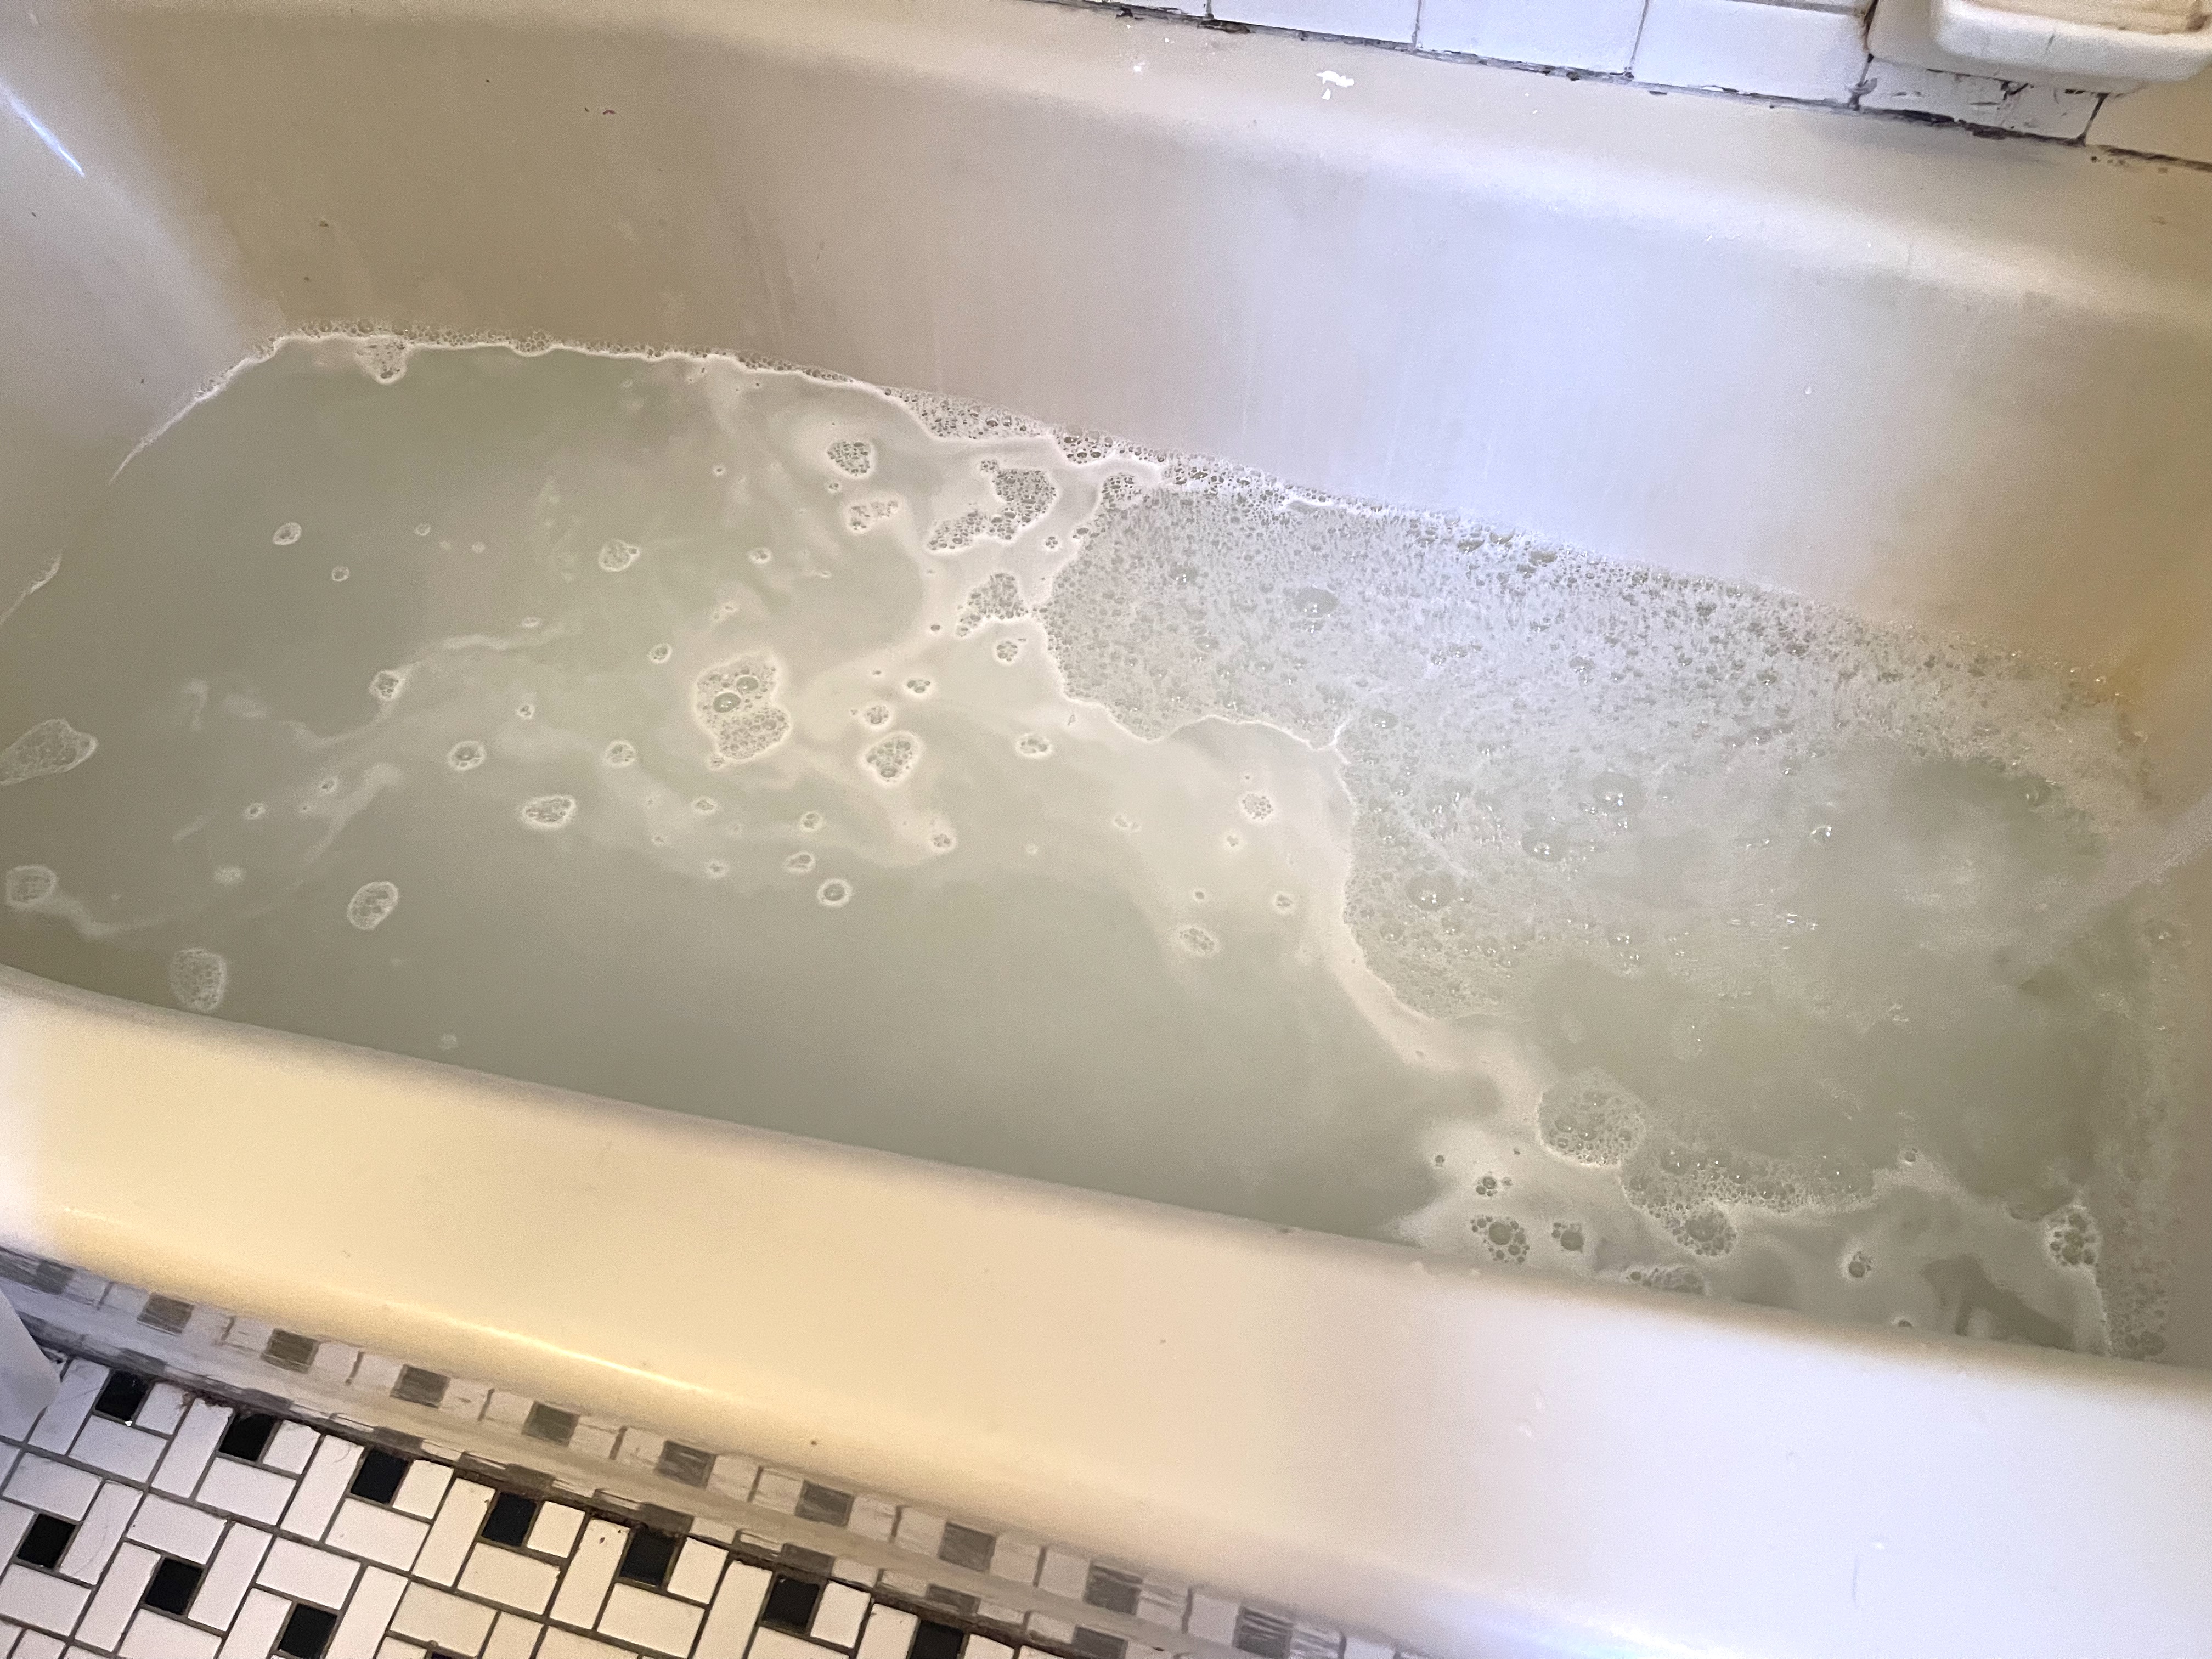 a sudsy bathtub prepared for laundry stripping.